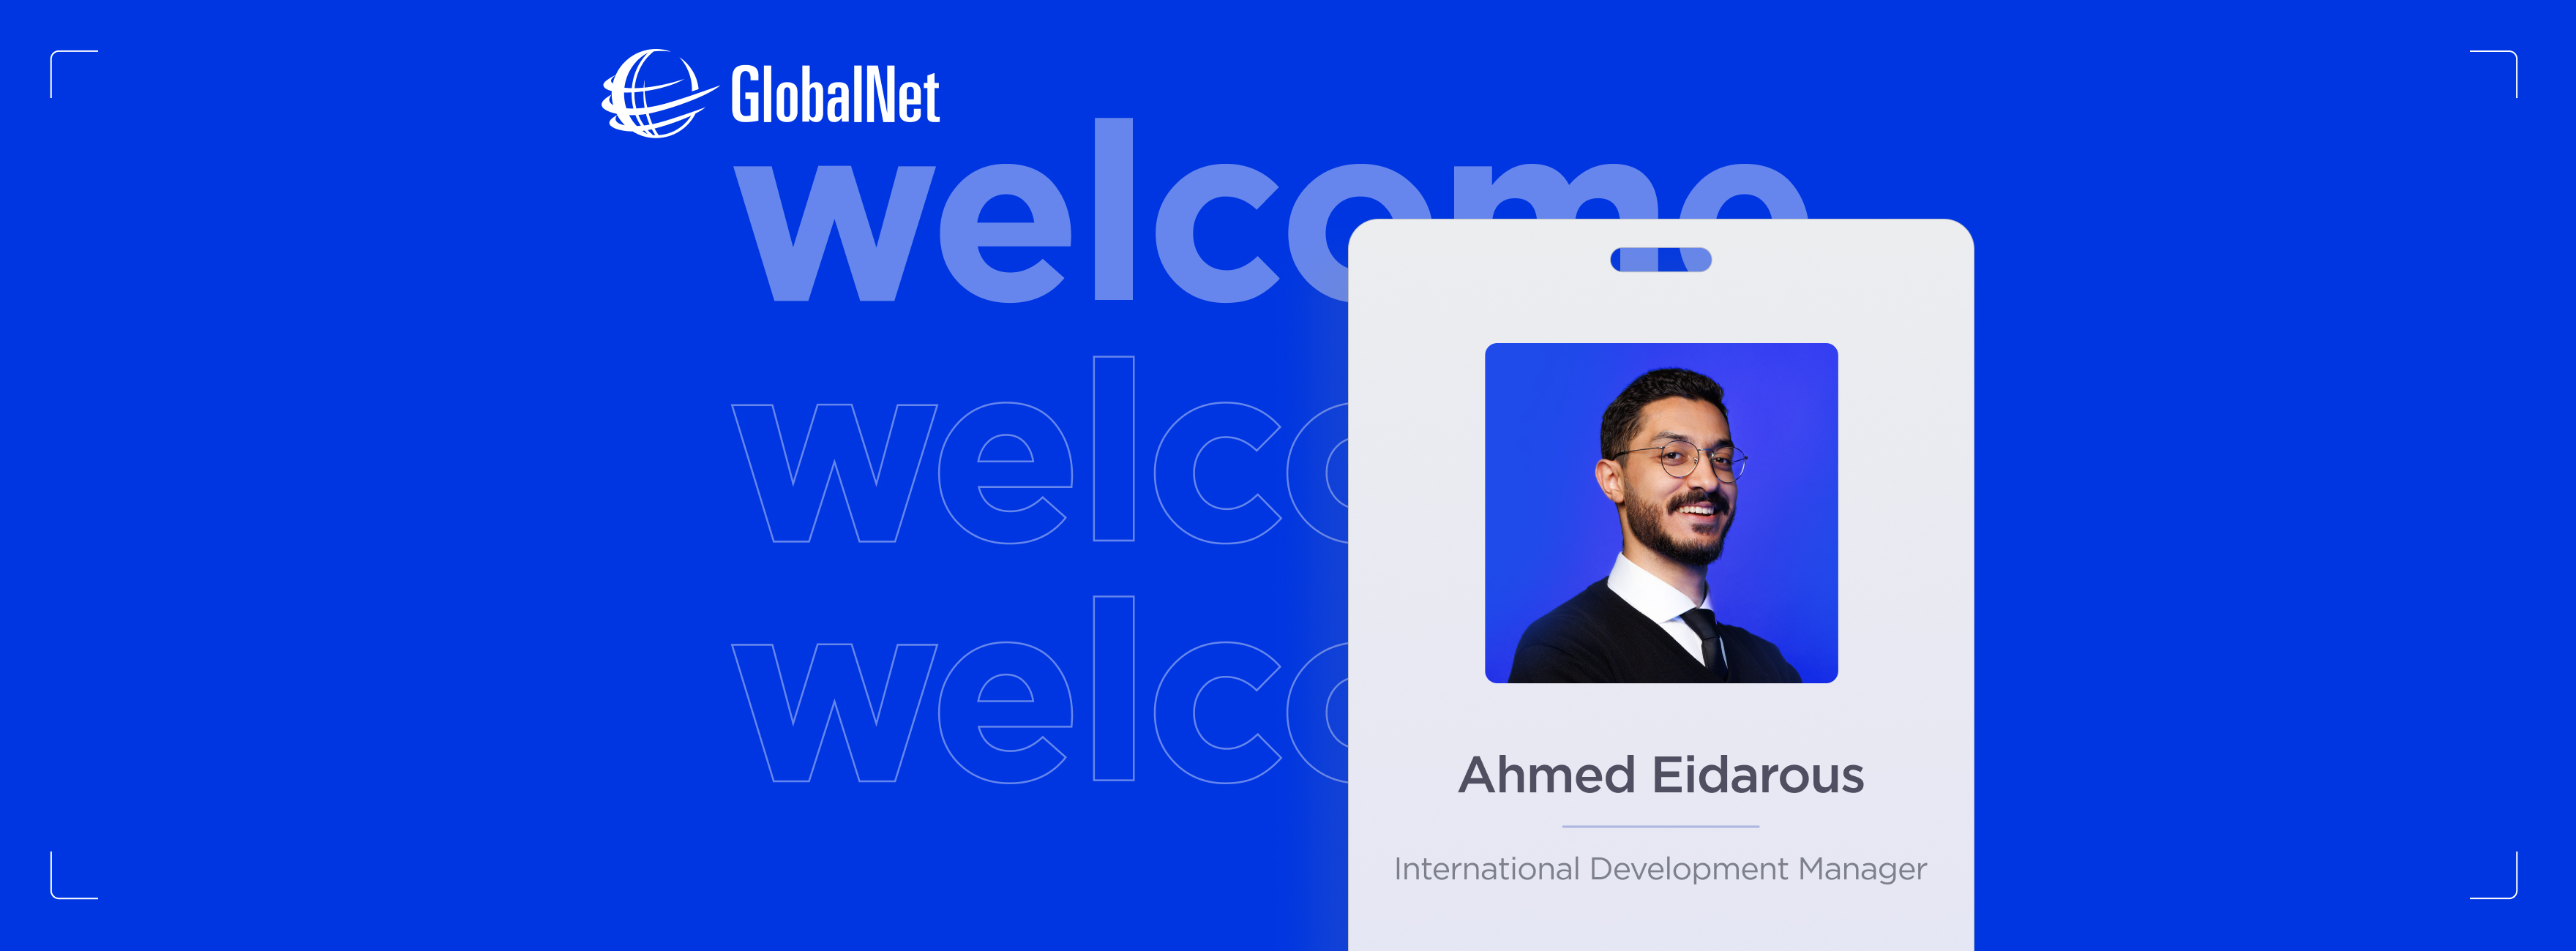 Meet our new International Development Manager: Ahmed Eidarous